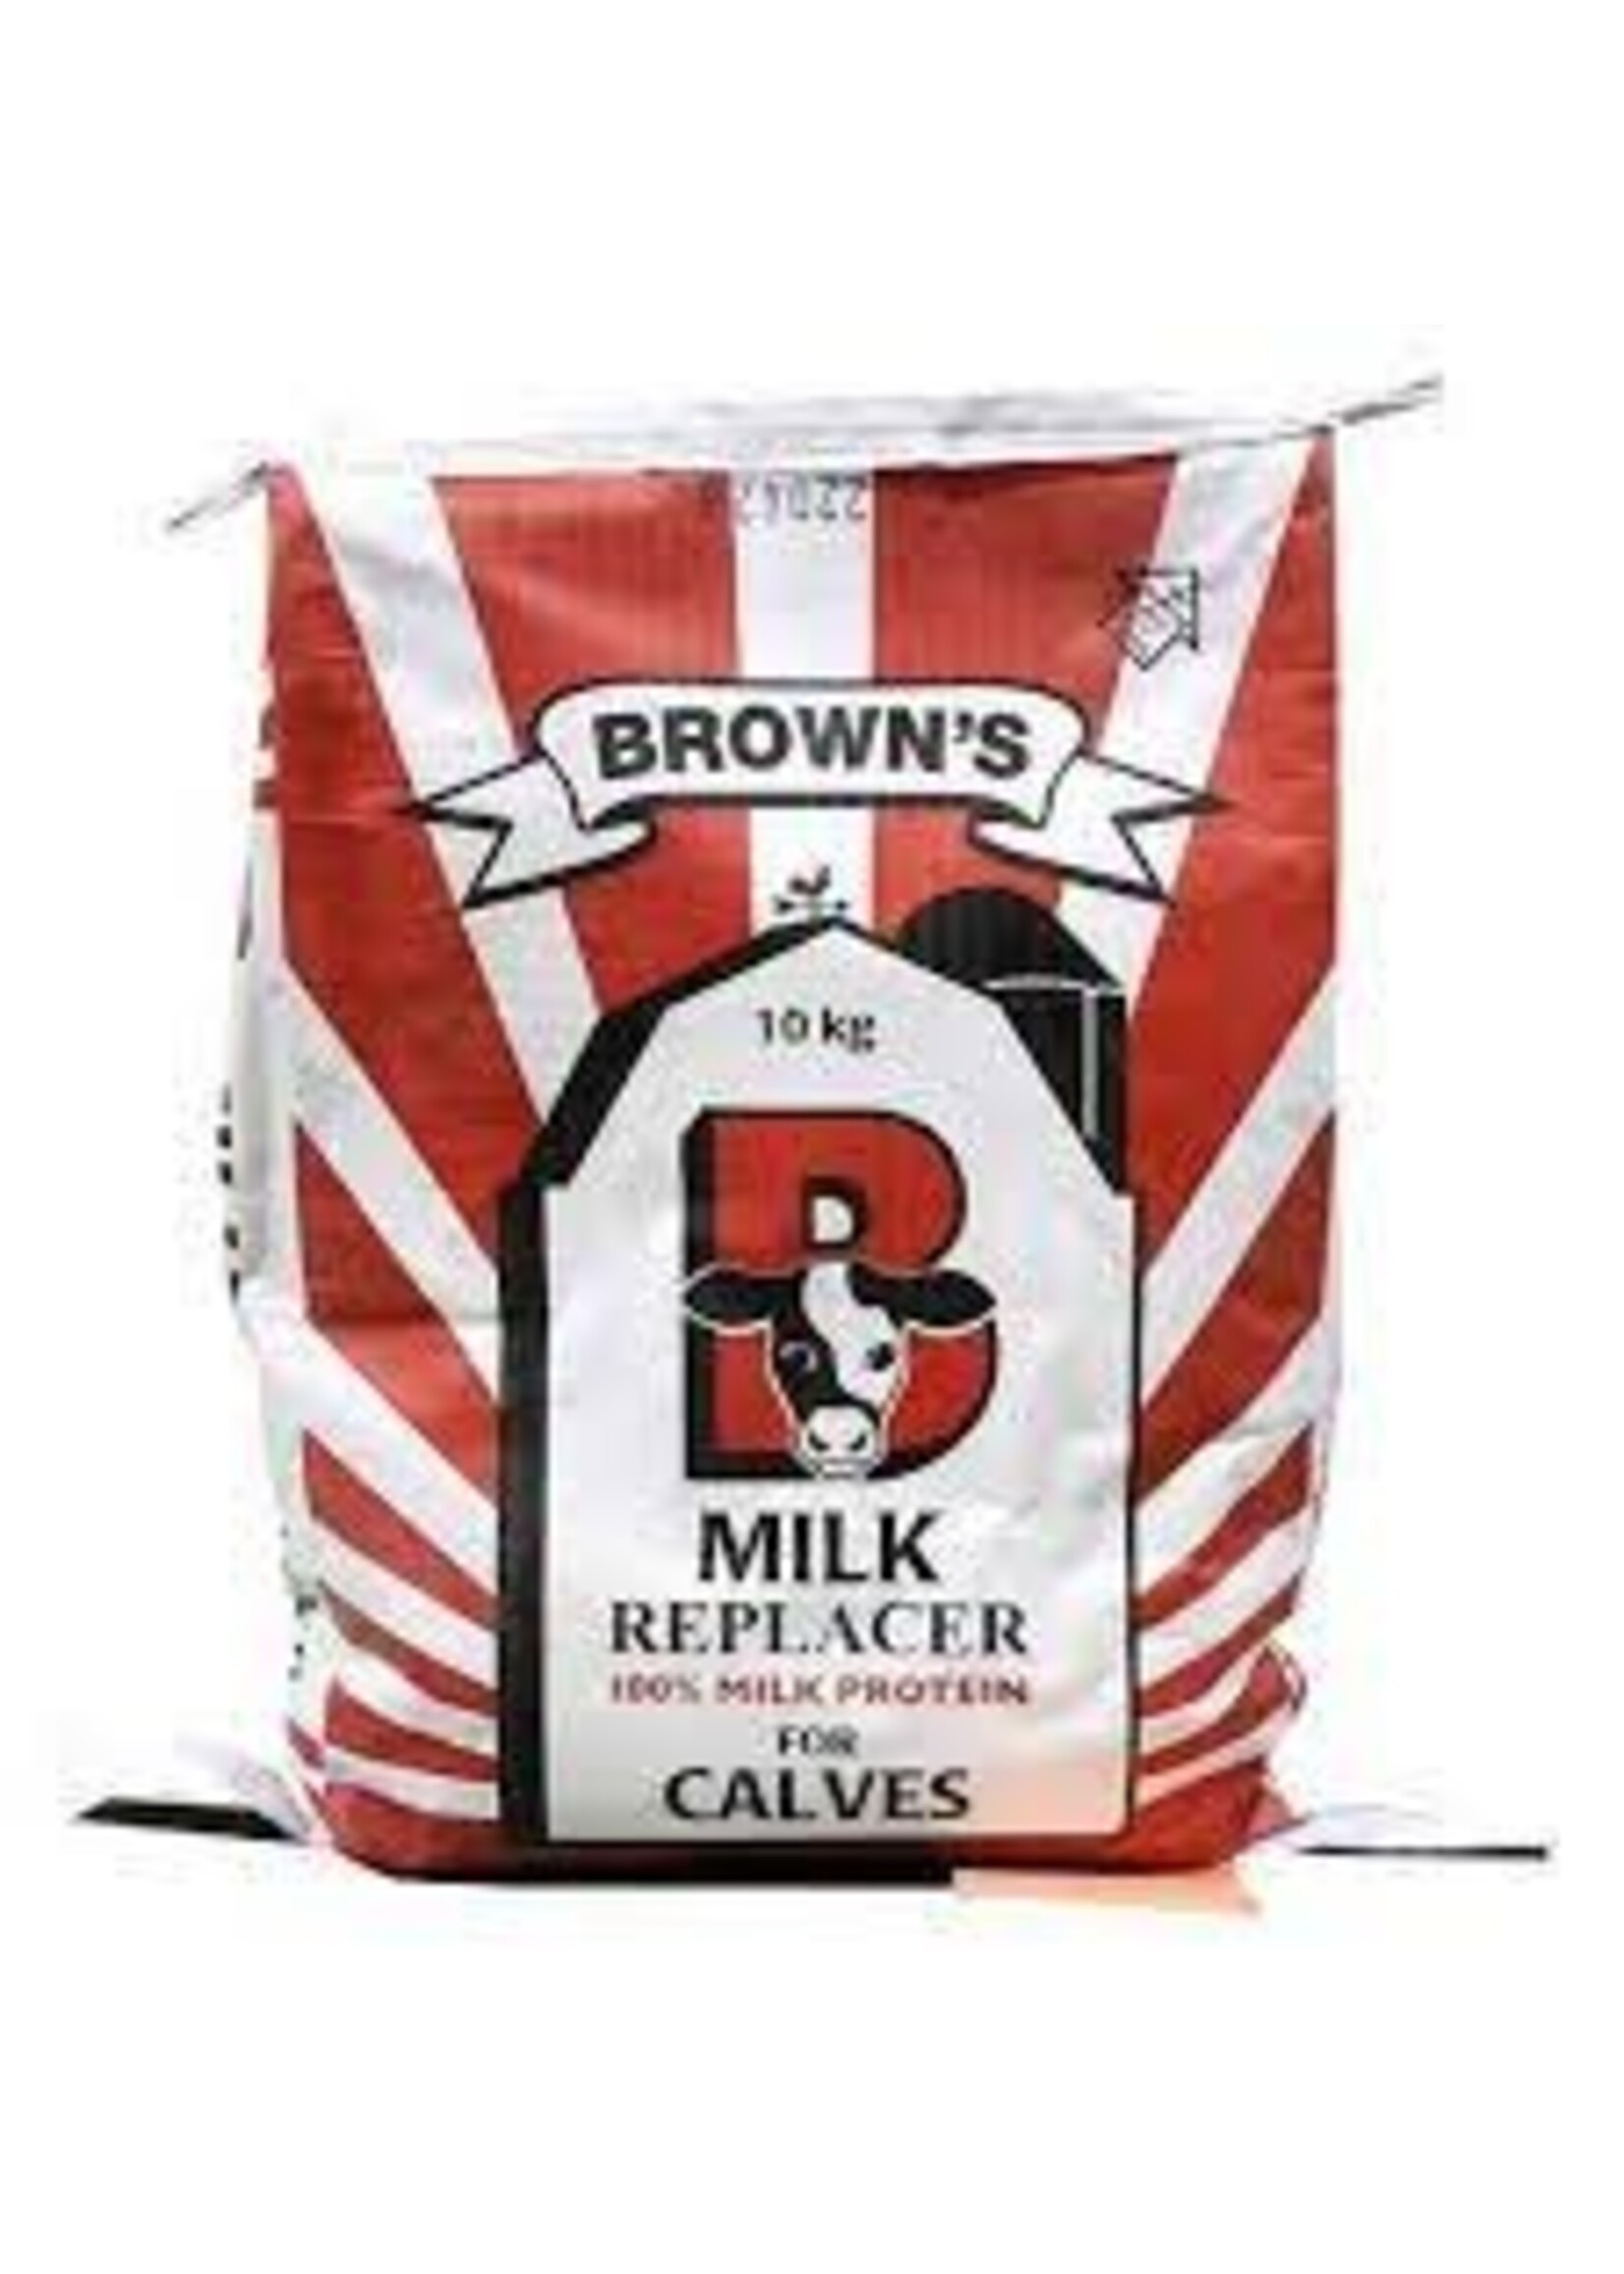 Browns Browns Calf Milk Replacer - Grower -